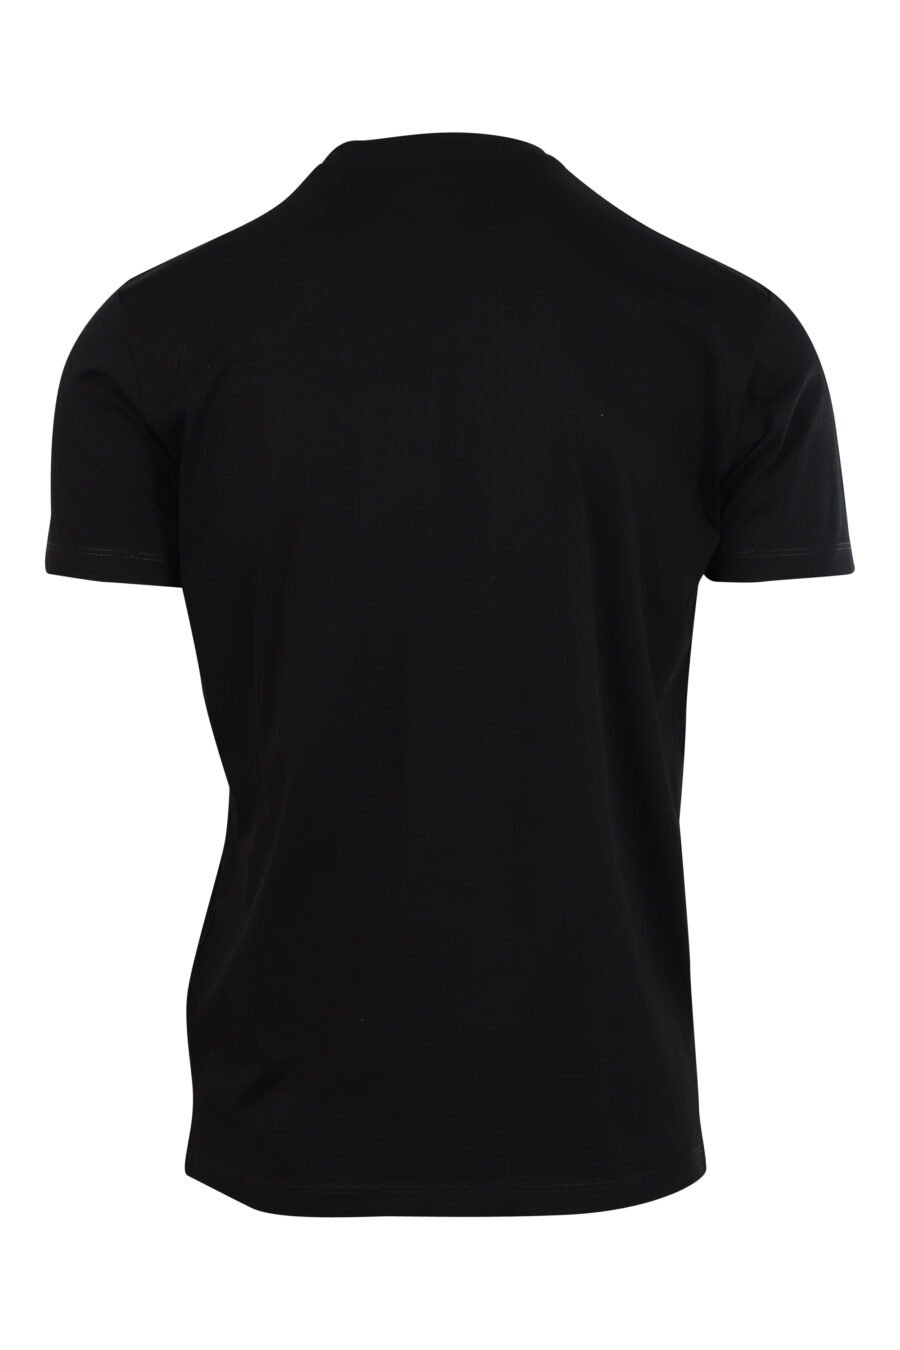 Schwarzes T-Shirt mit Maxilogo-Grafik Blattumriss - 8052134941010 2